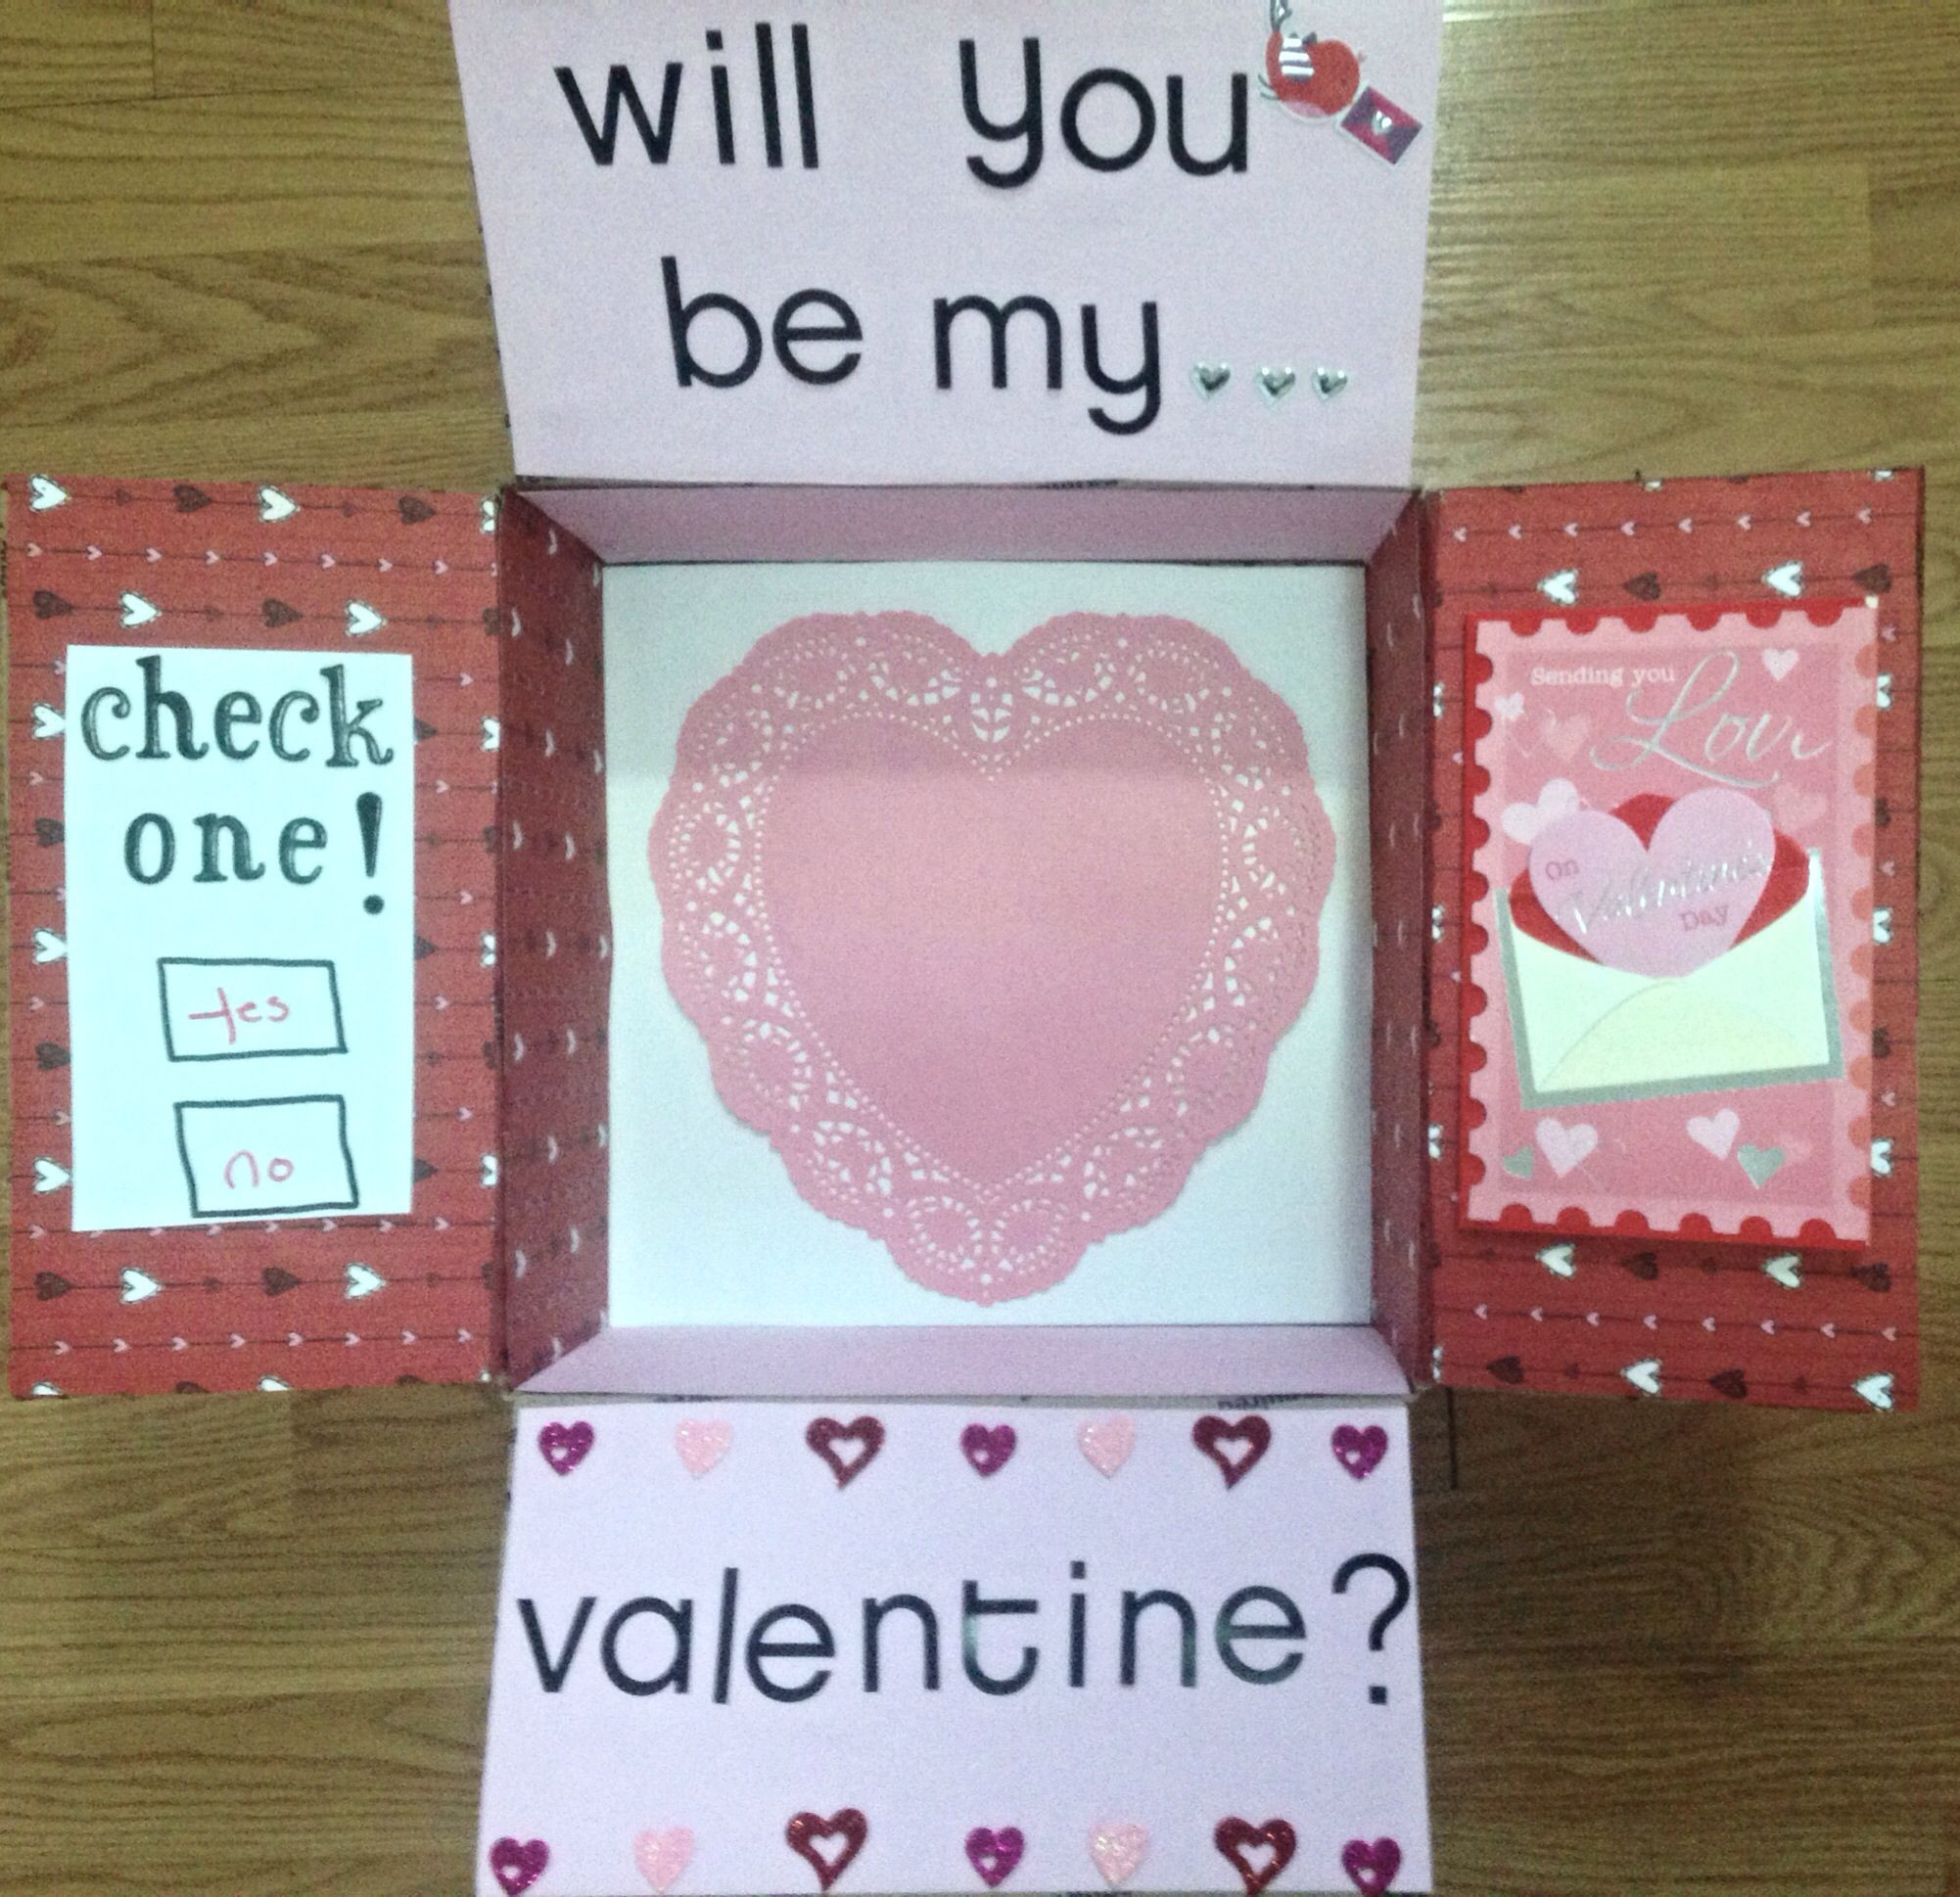 Will You Be My Valentine Gift Ideas Elegant Will You Be My Valentine ️ Care Package 7